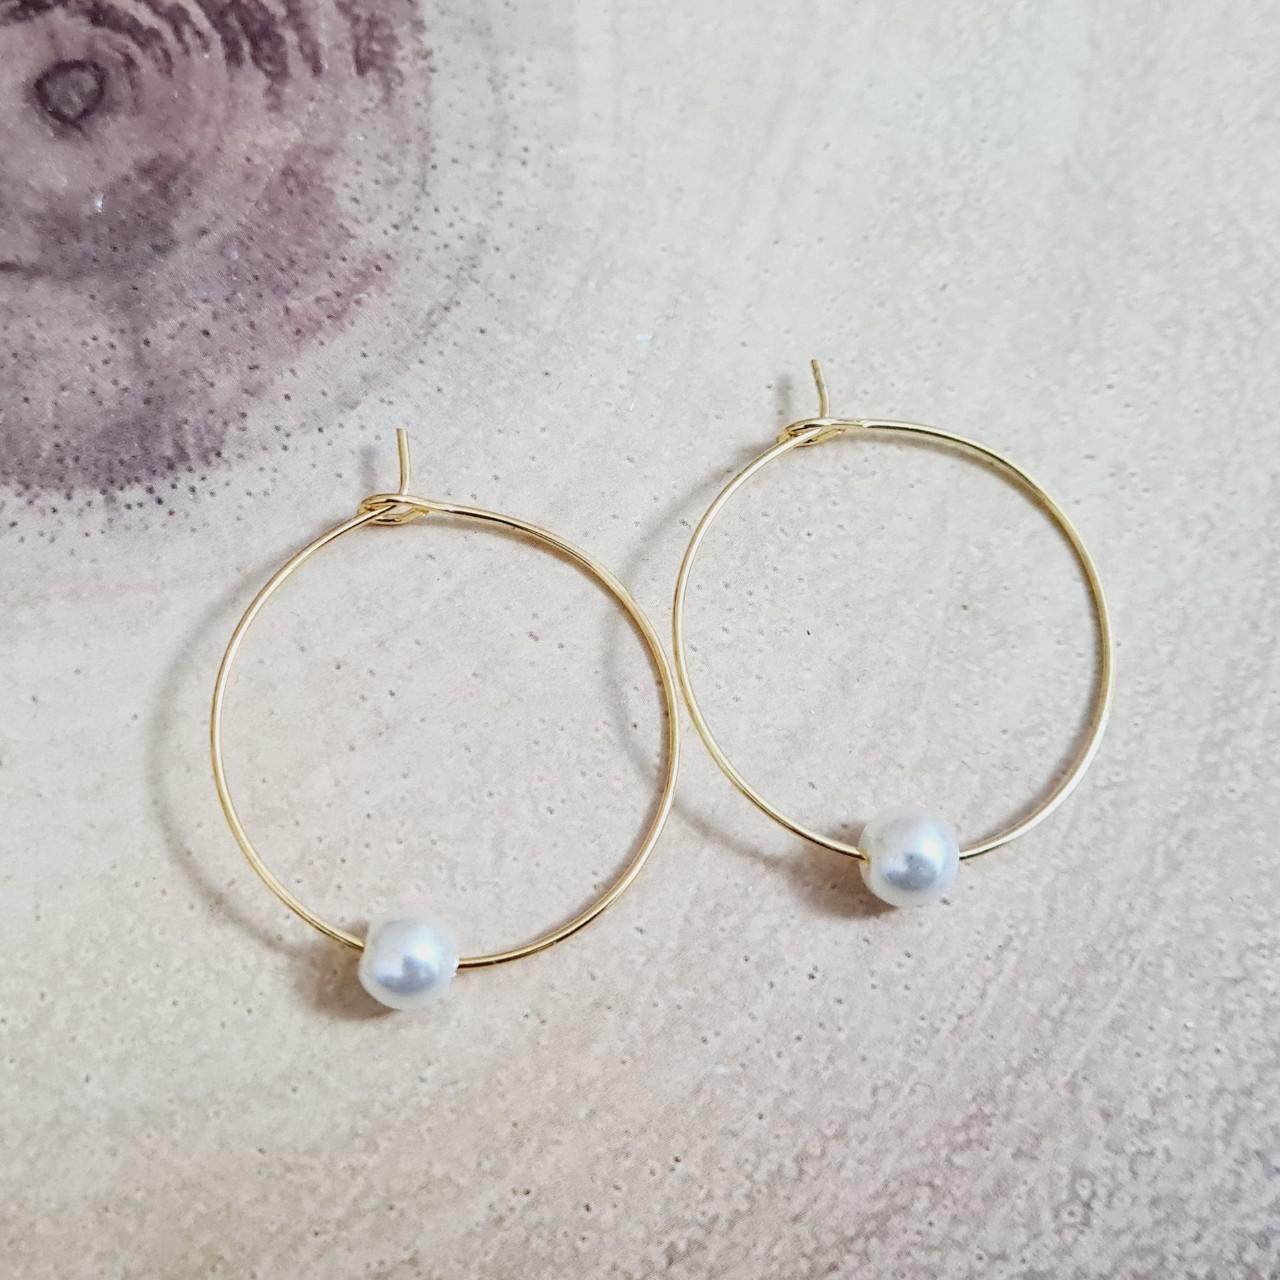 Product Image 2 - Boho Pearl hoops Earrings Gold